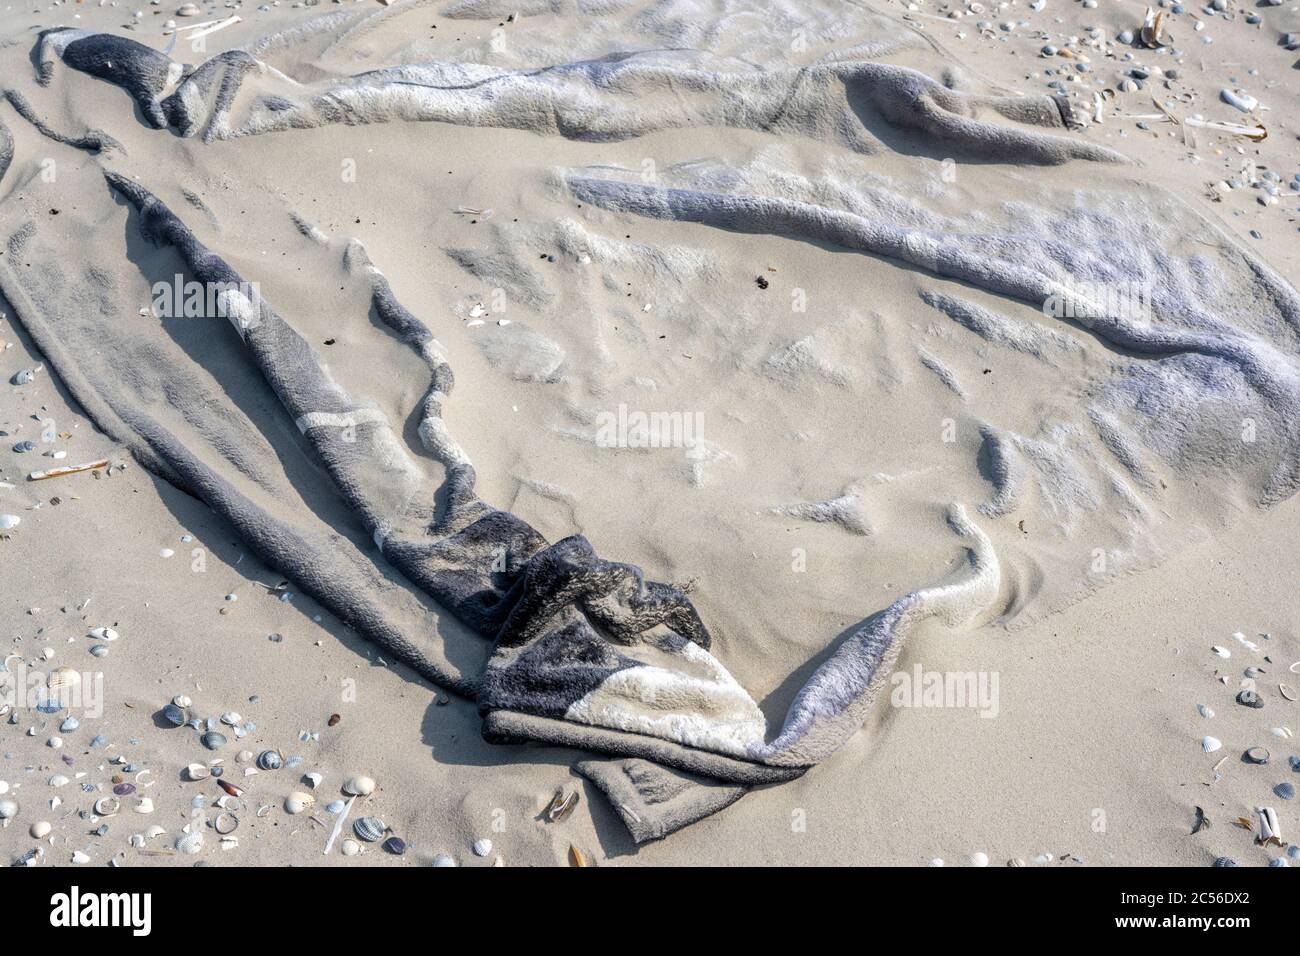 Germany, Lower Saxony, East Frisia, Juist, washed up beach goods. Stock Photo